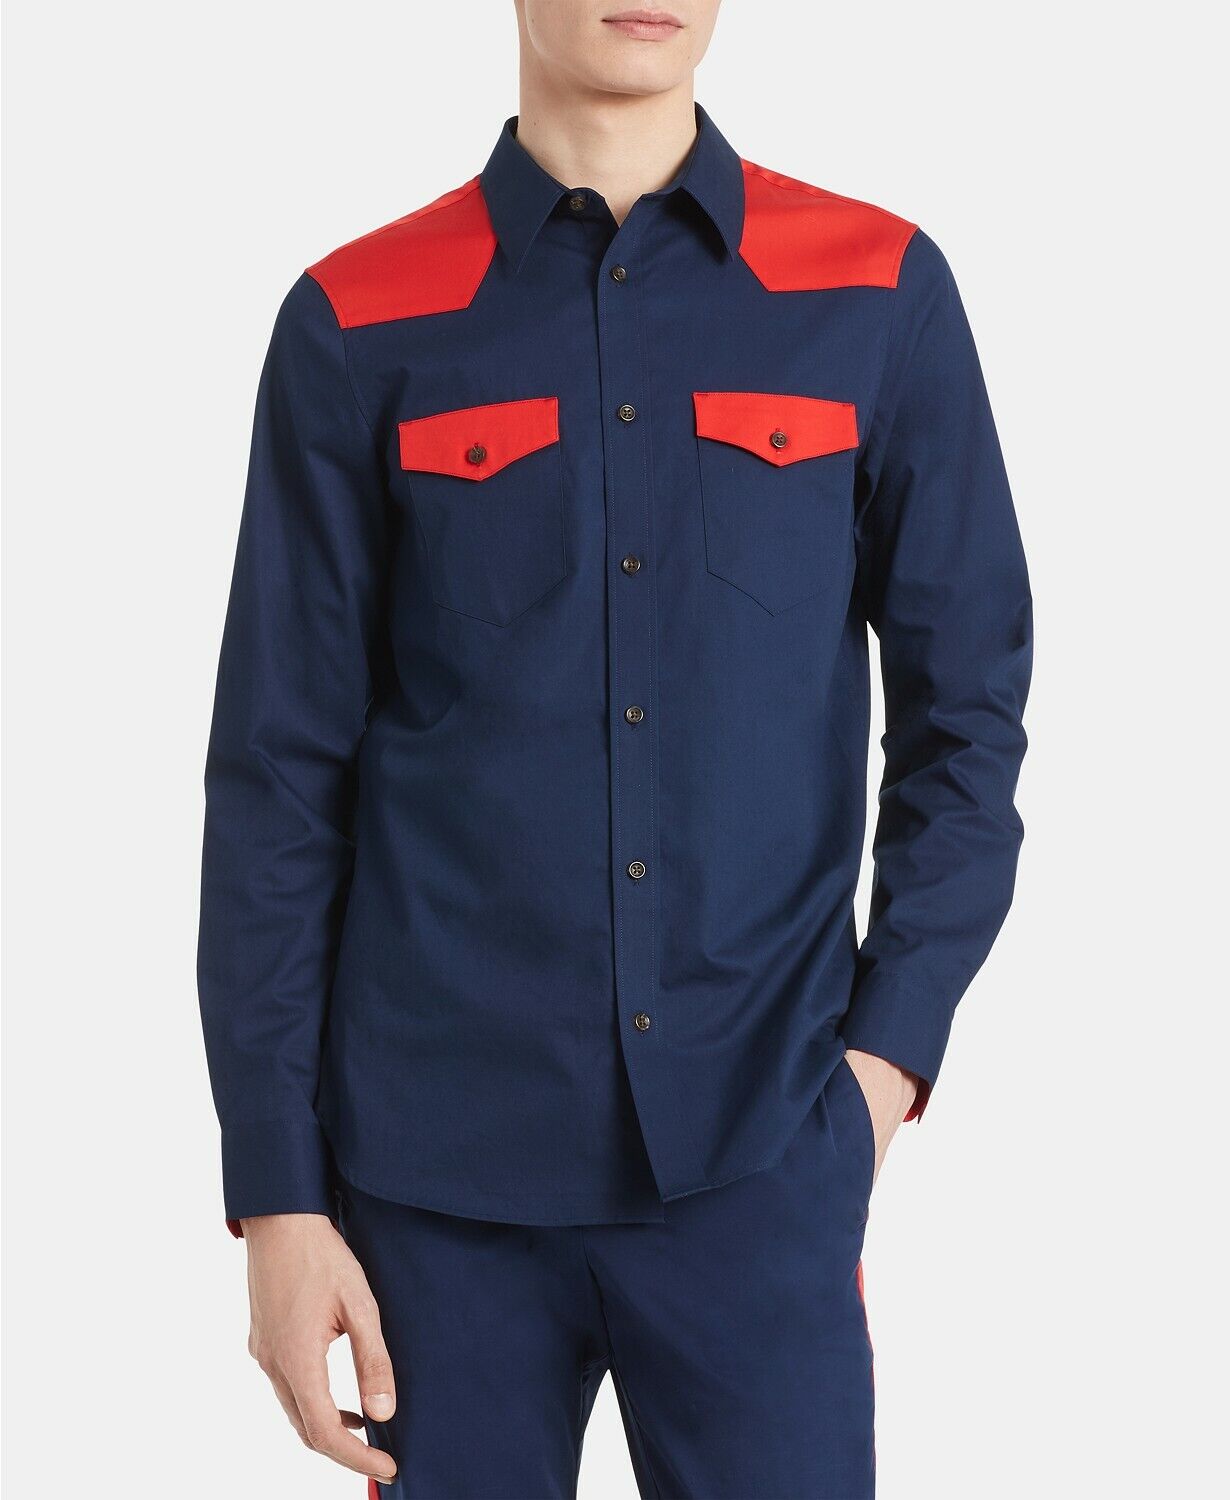 Calvin Klein Ck Western Shirt Navy Red Slim Fit Colorblock Cotton 